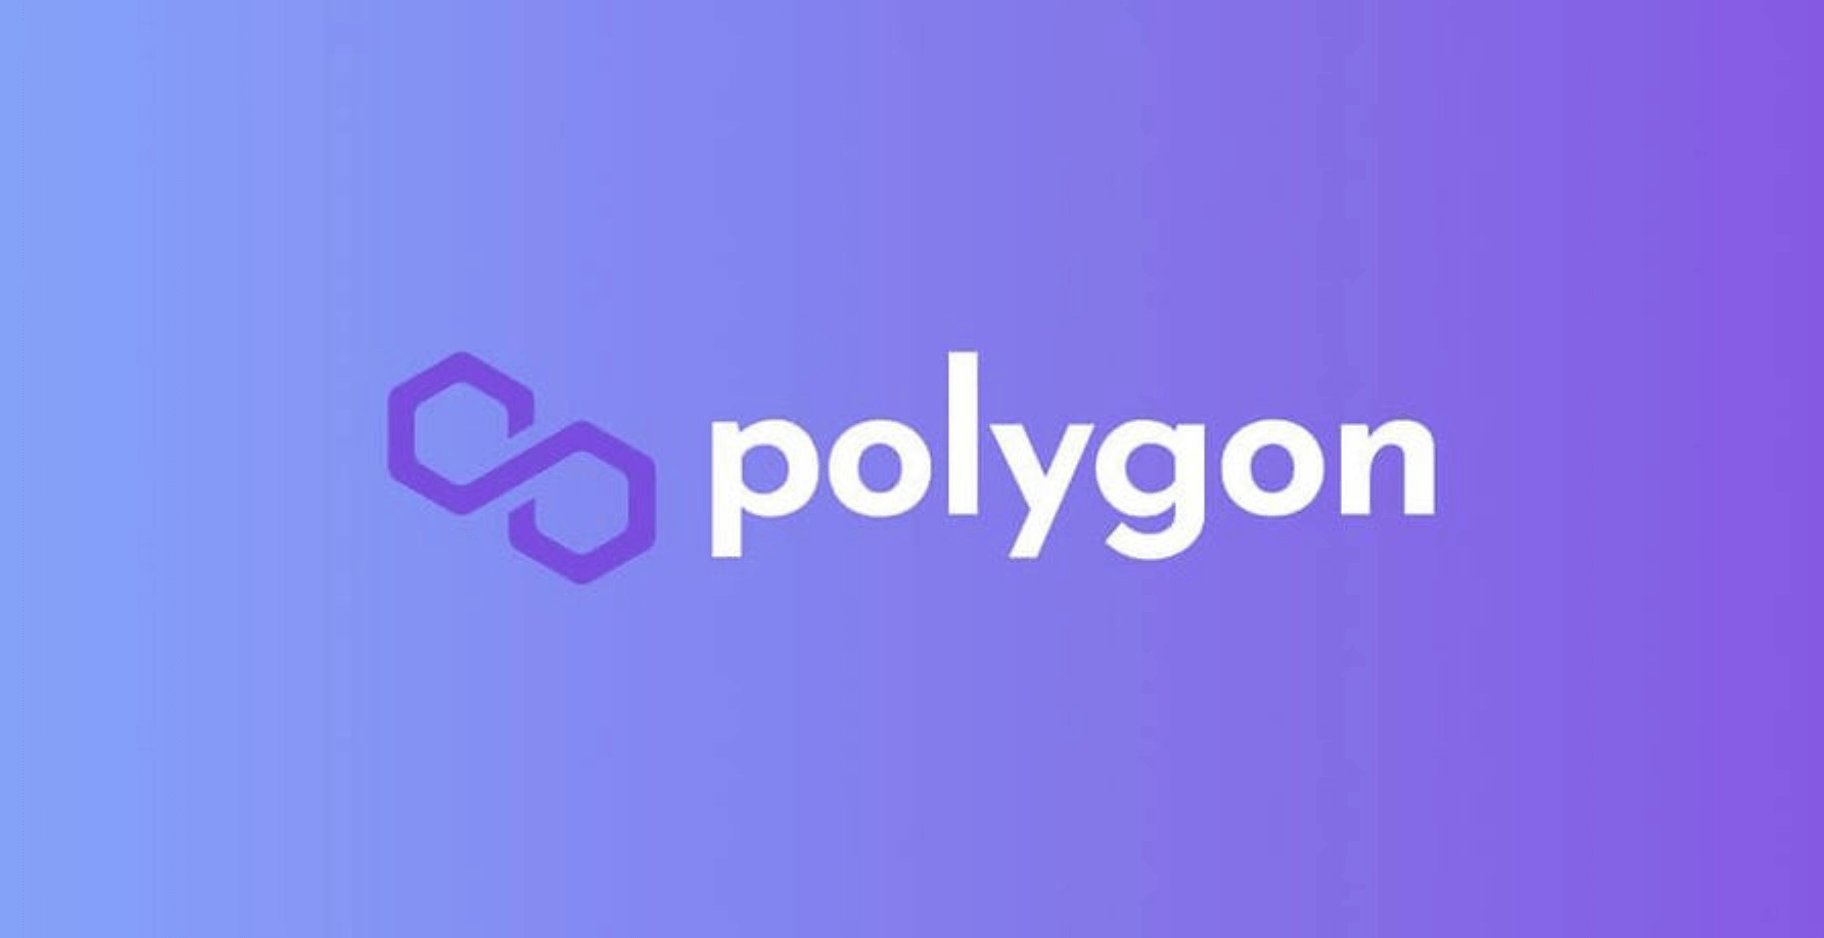 Polygon logo on purple background